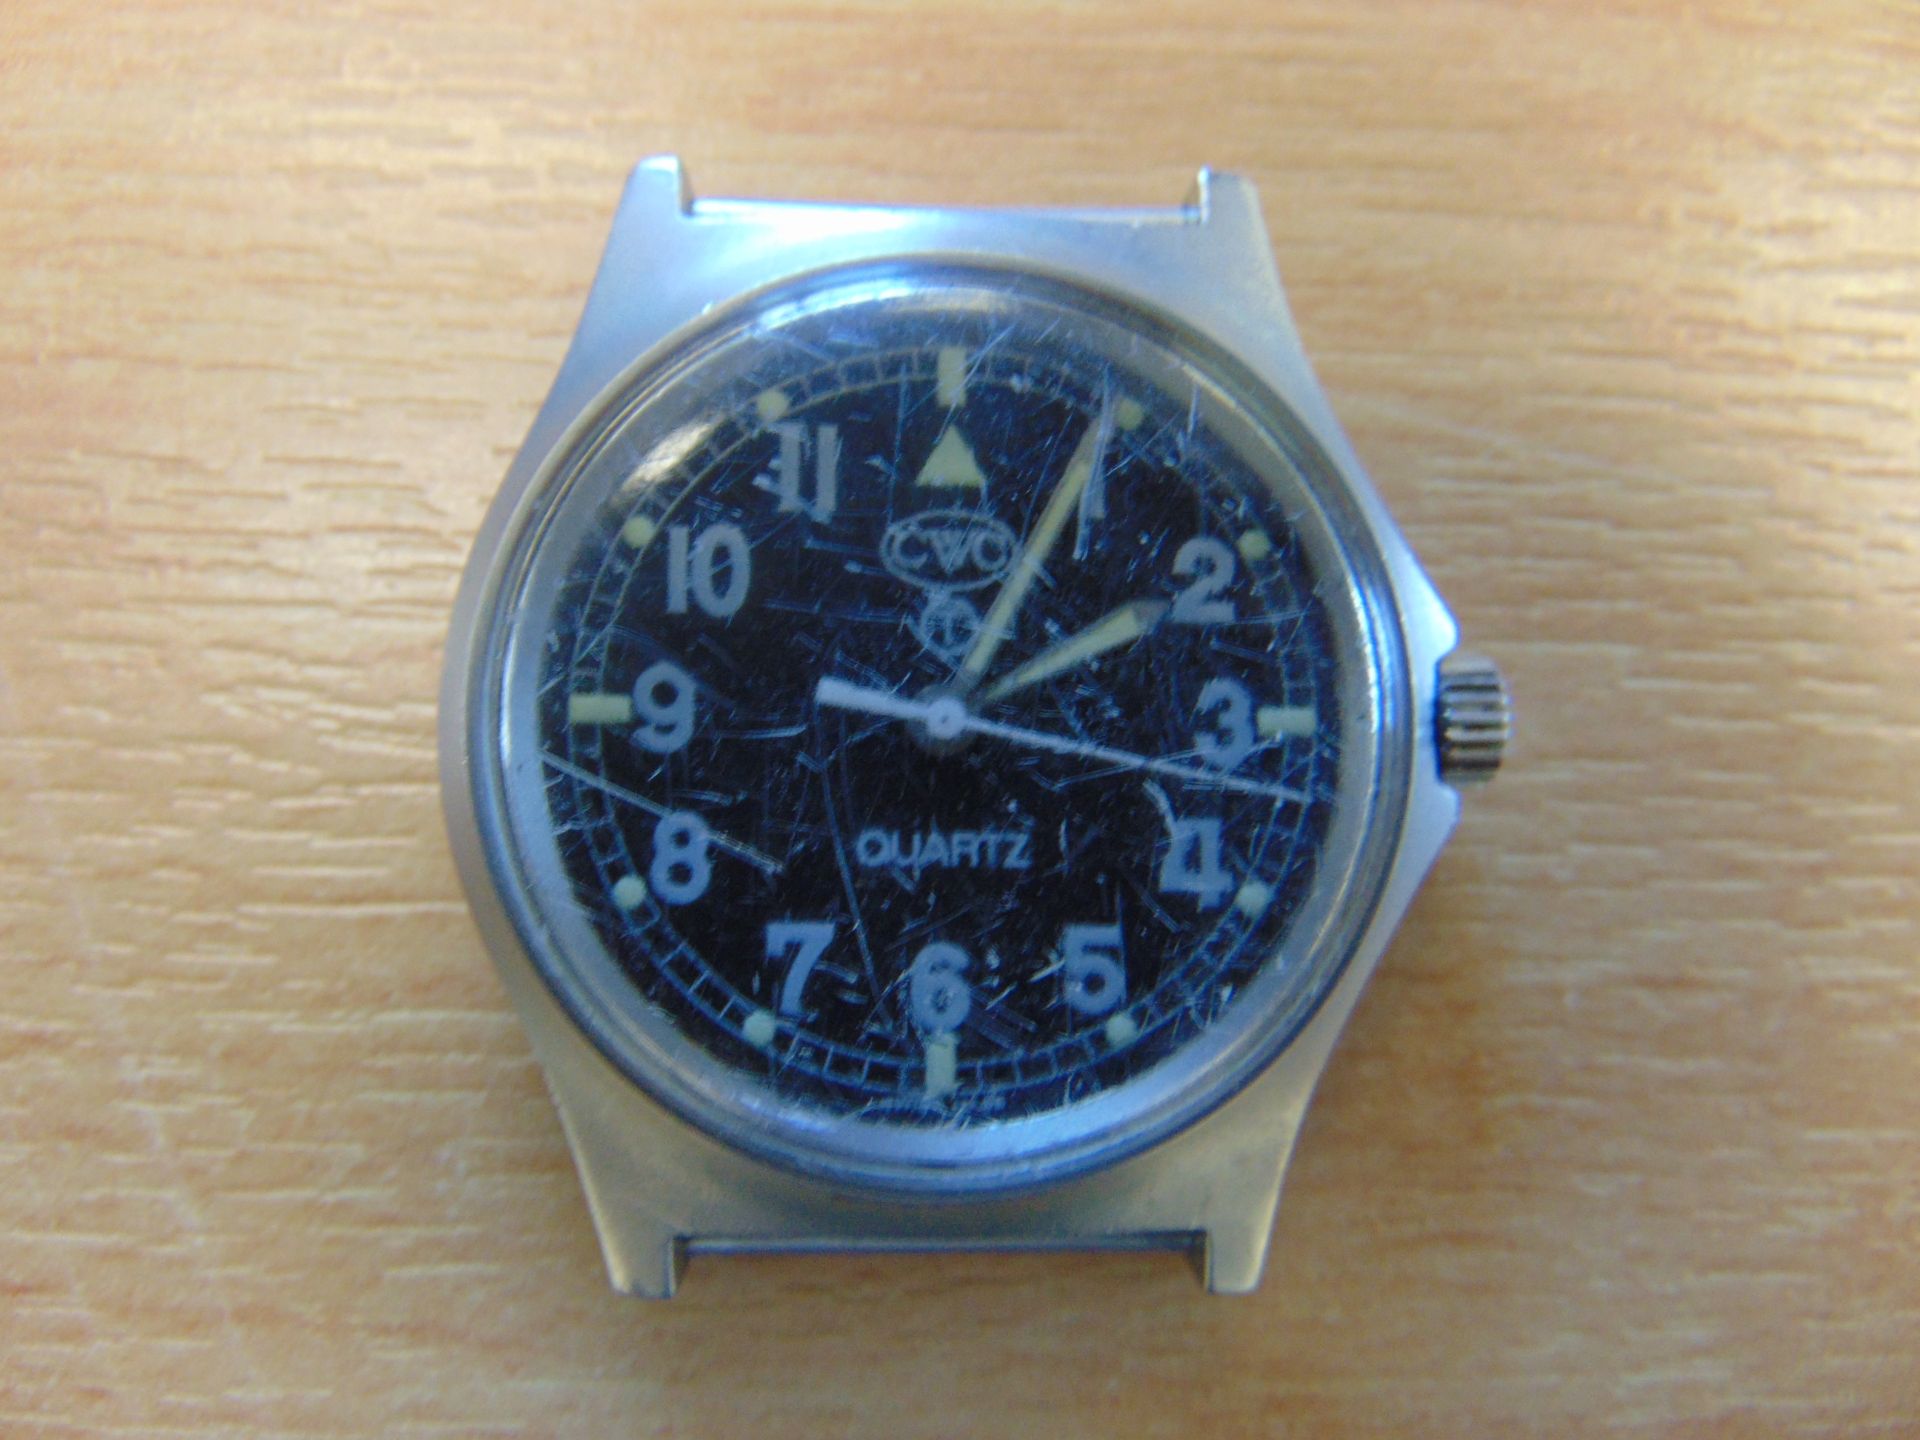 CWC (Cabot Watch Co) British Army W10 Service Watch, Date 1991, Gulf War 1, New Batt/Strap - Image 2 of 5